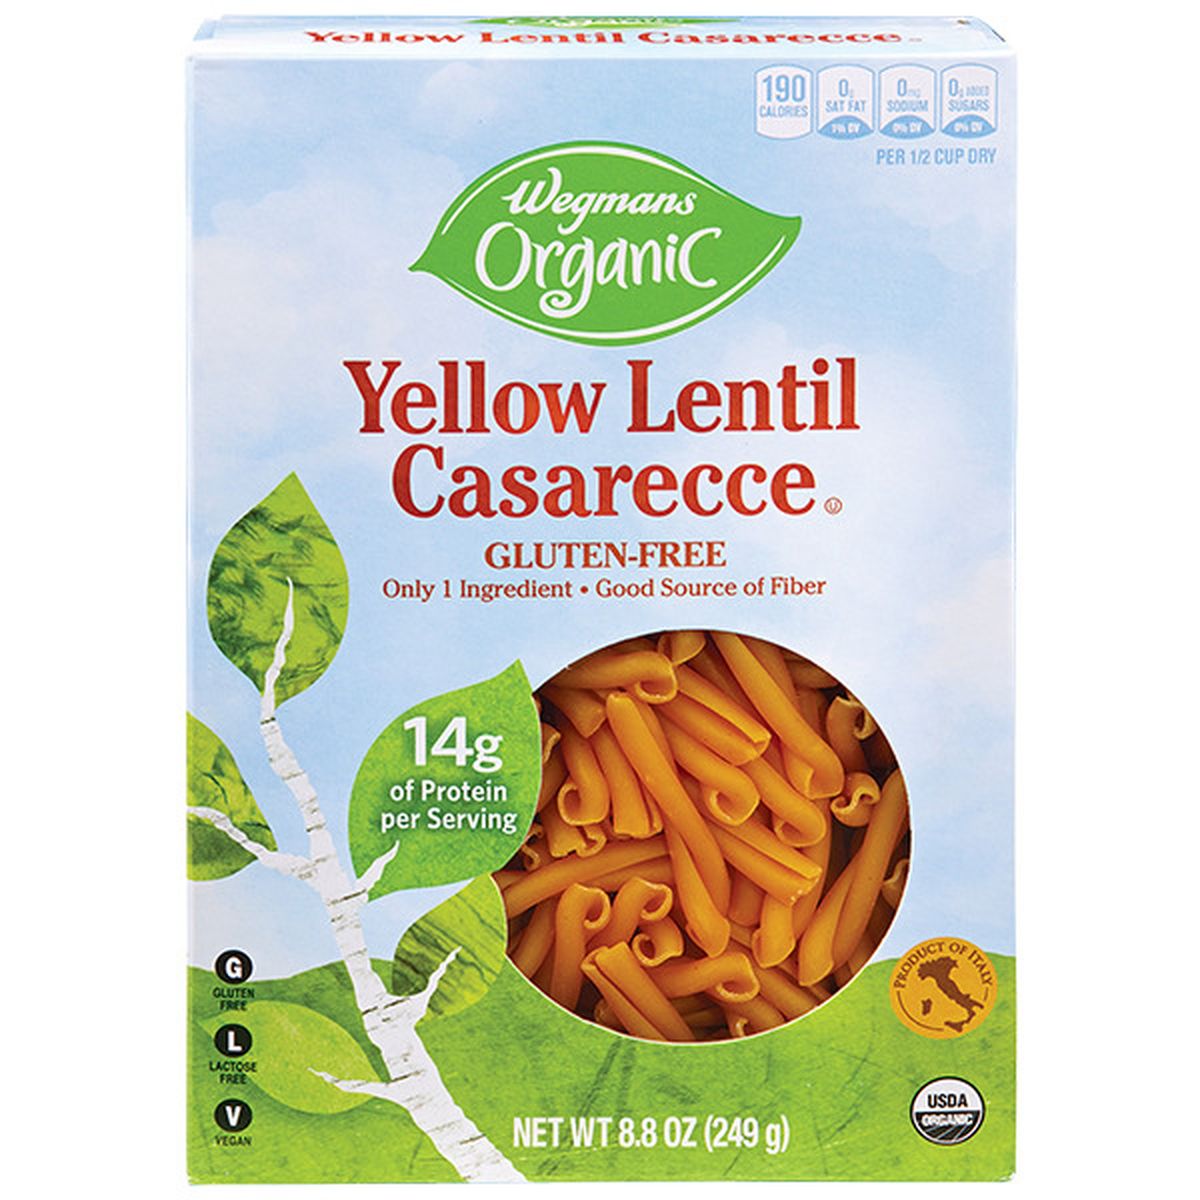 Calories in Wegmans Organic Yellow Lentil Casarecce